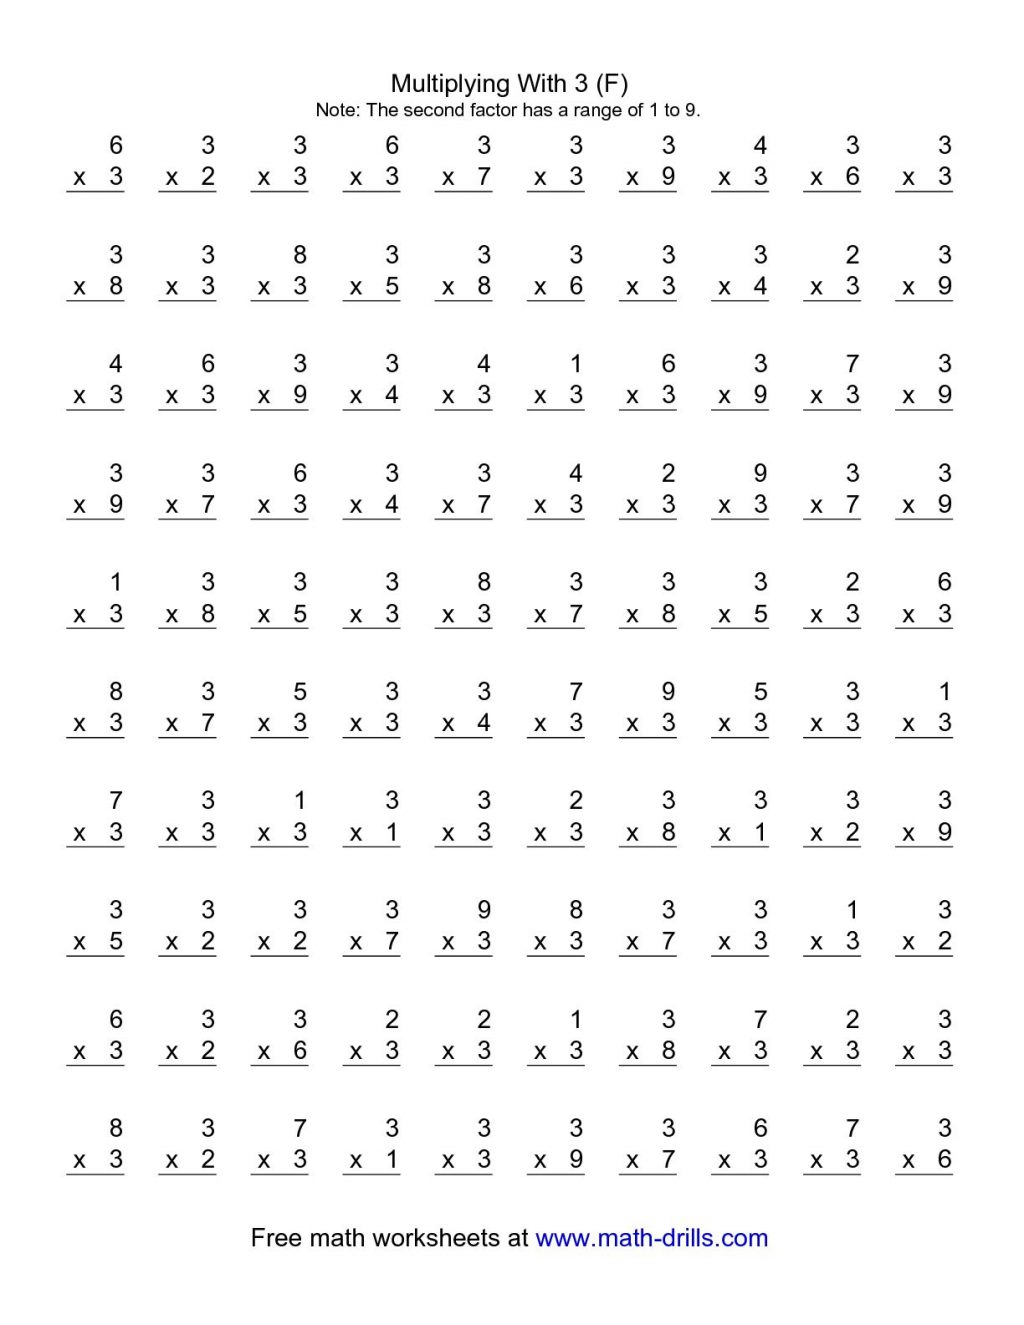 Multiplication Tables 1 12 Printable Worksheets Worksheets For All